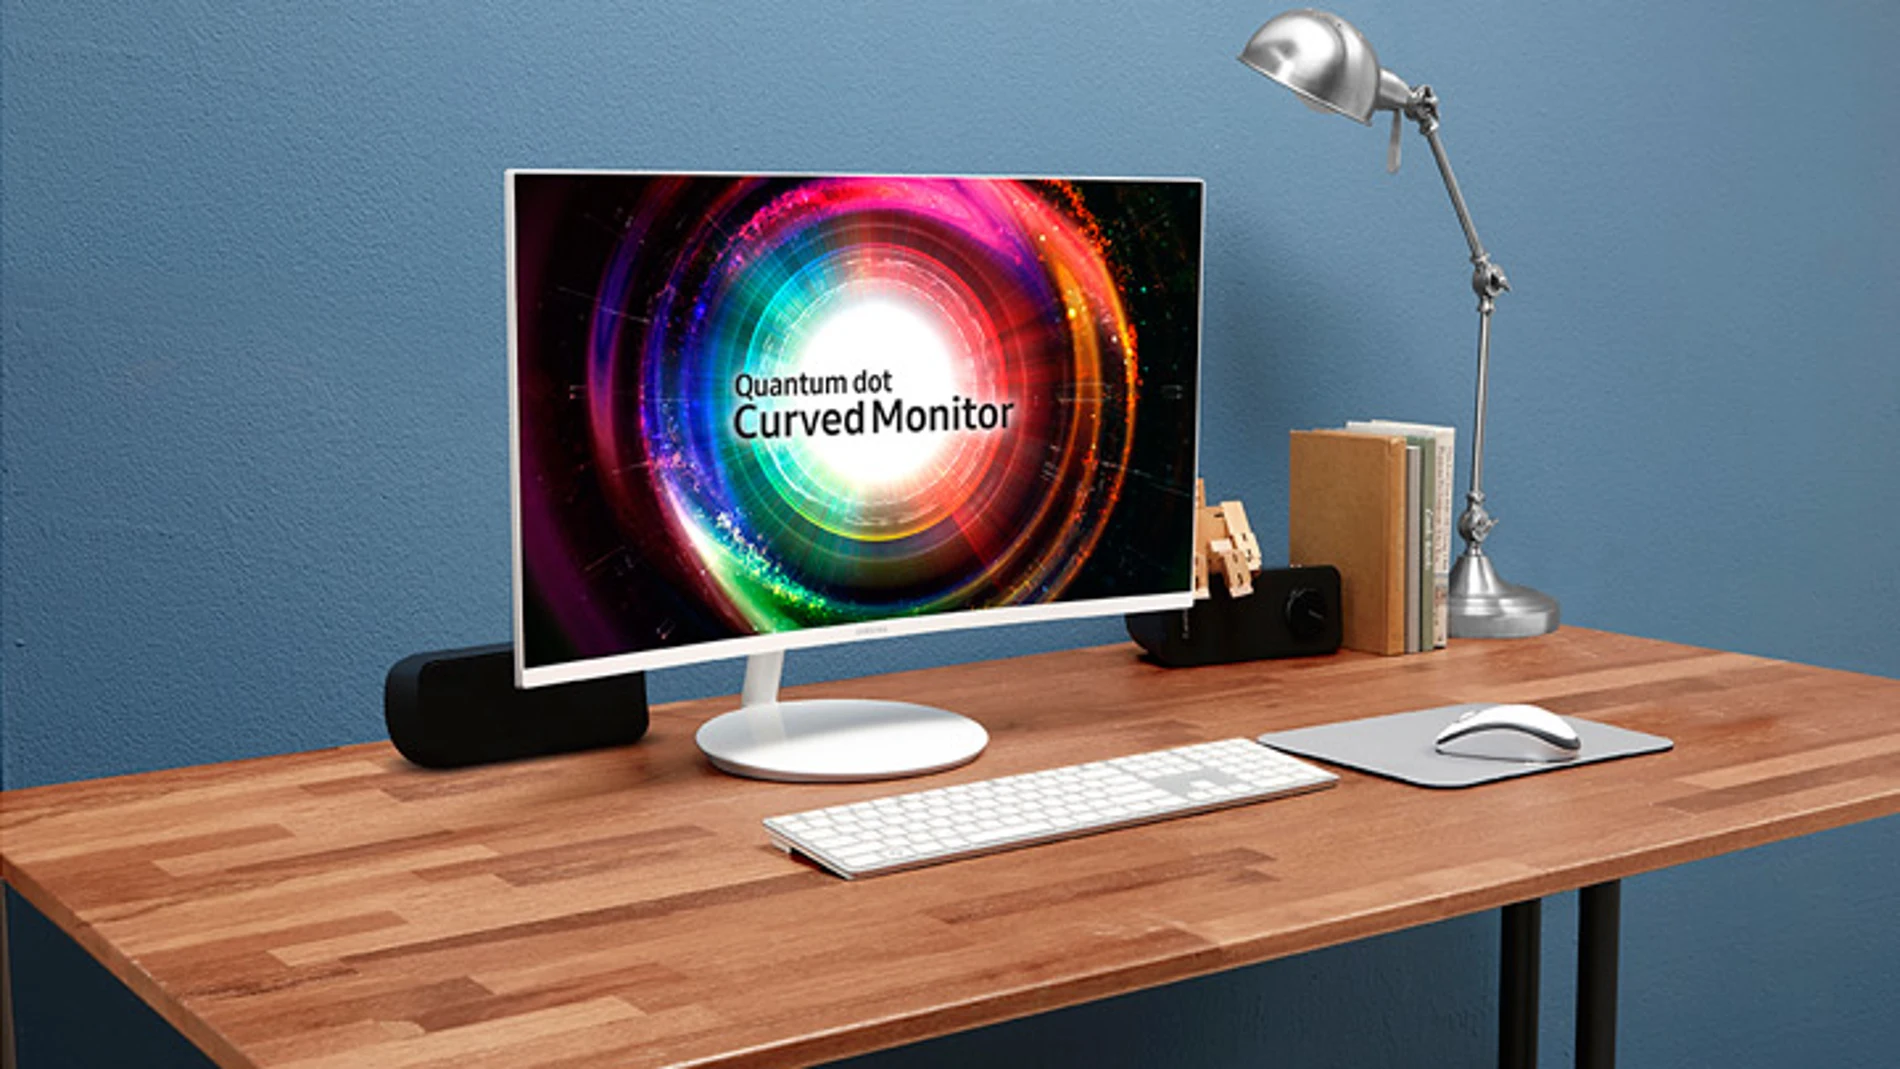 El nuevo monitor curvo Quantum dot CH711